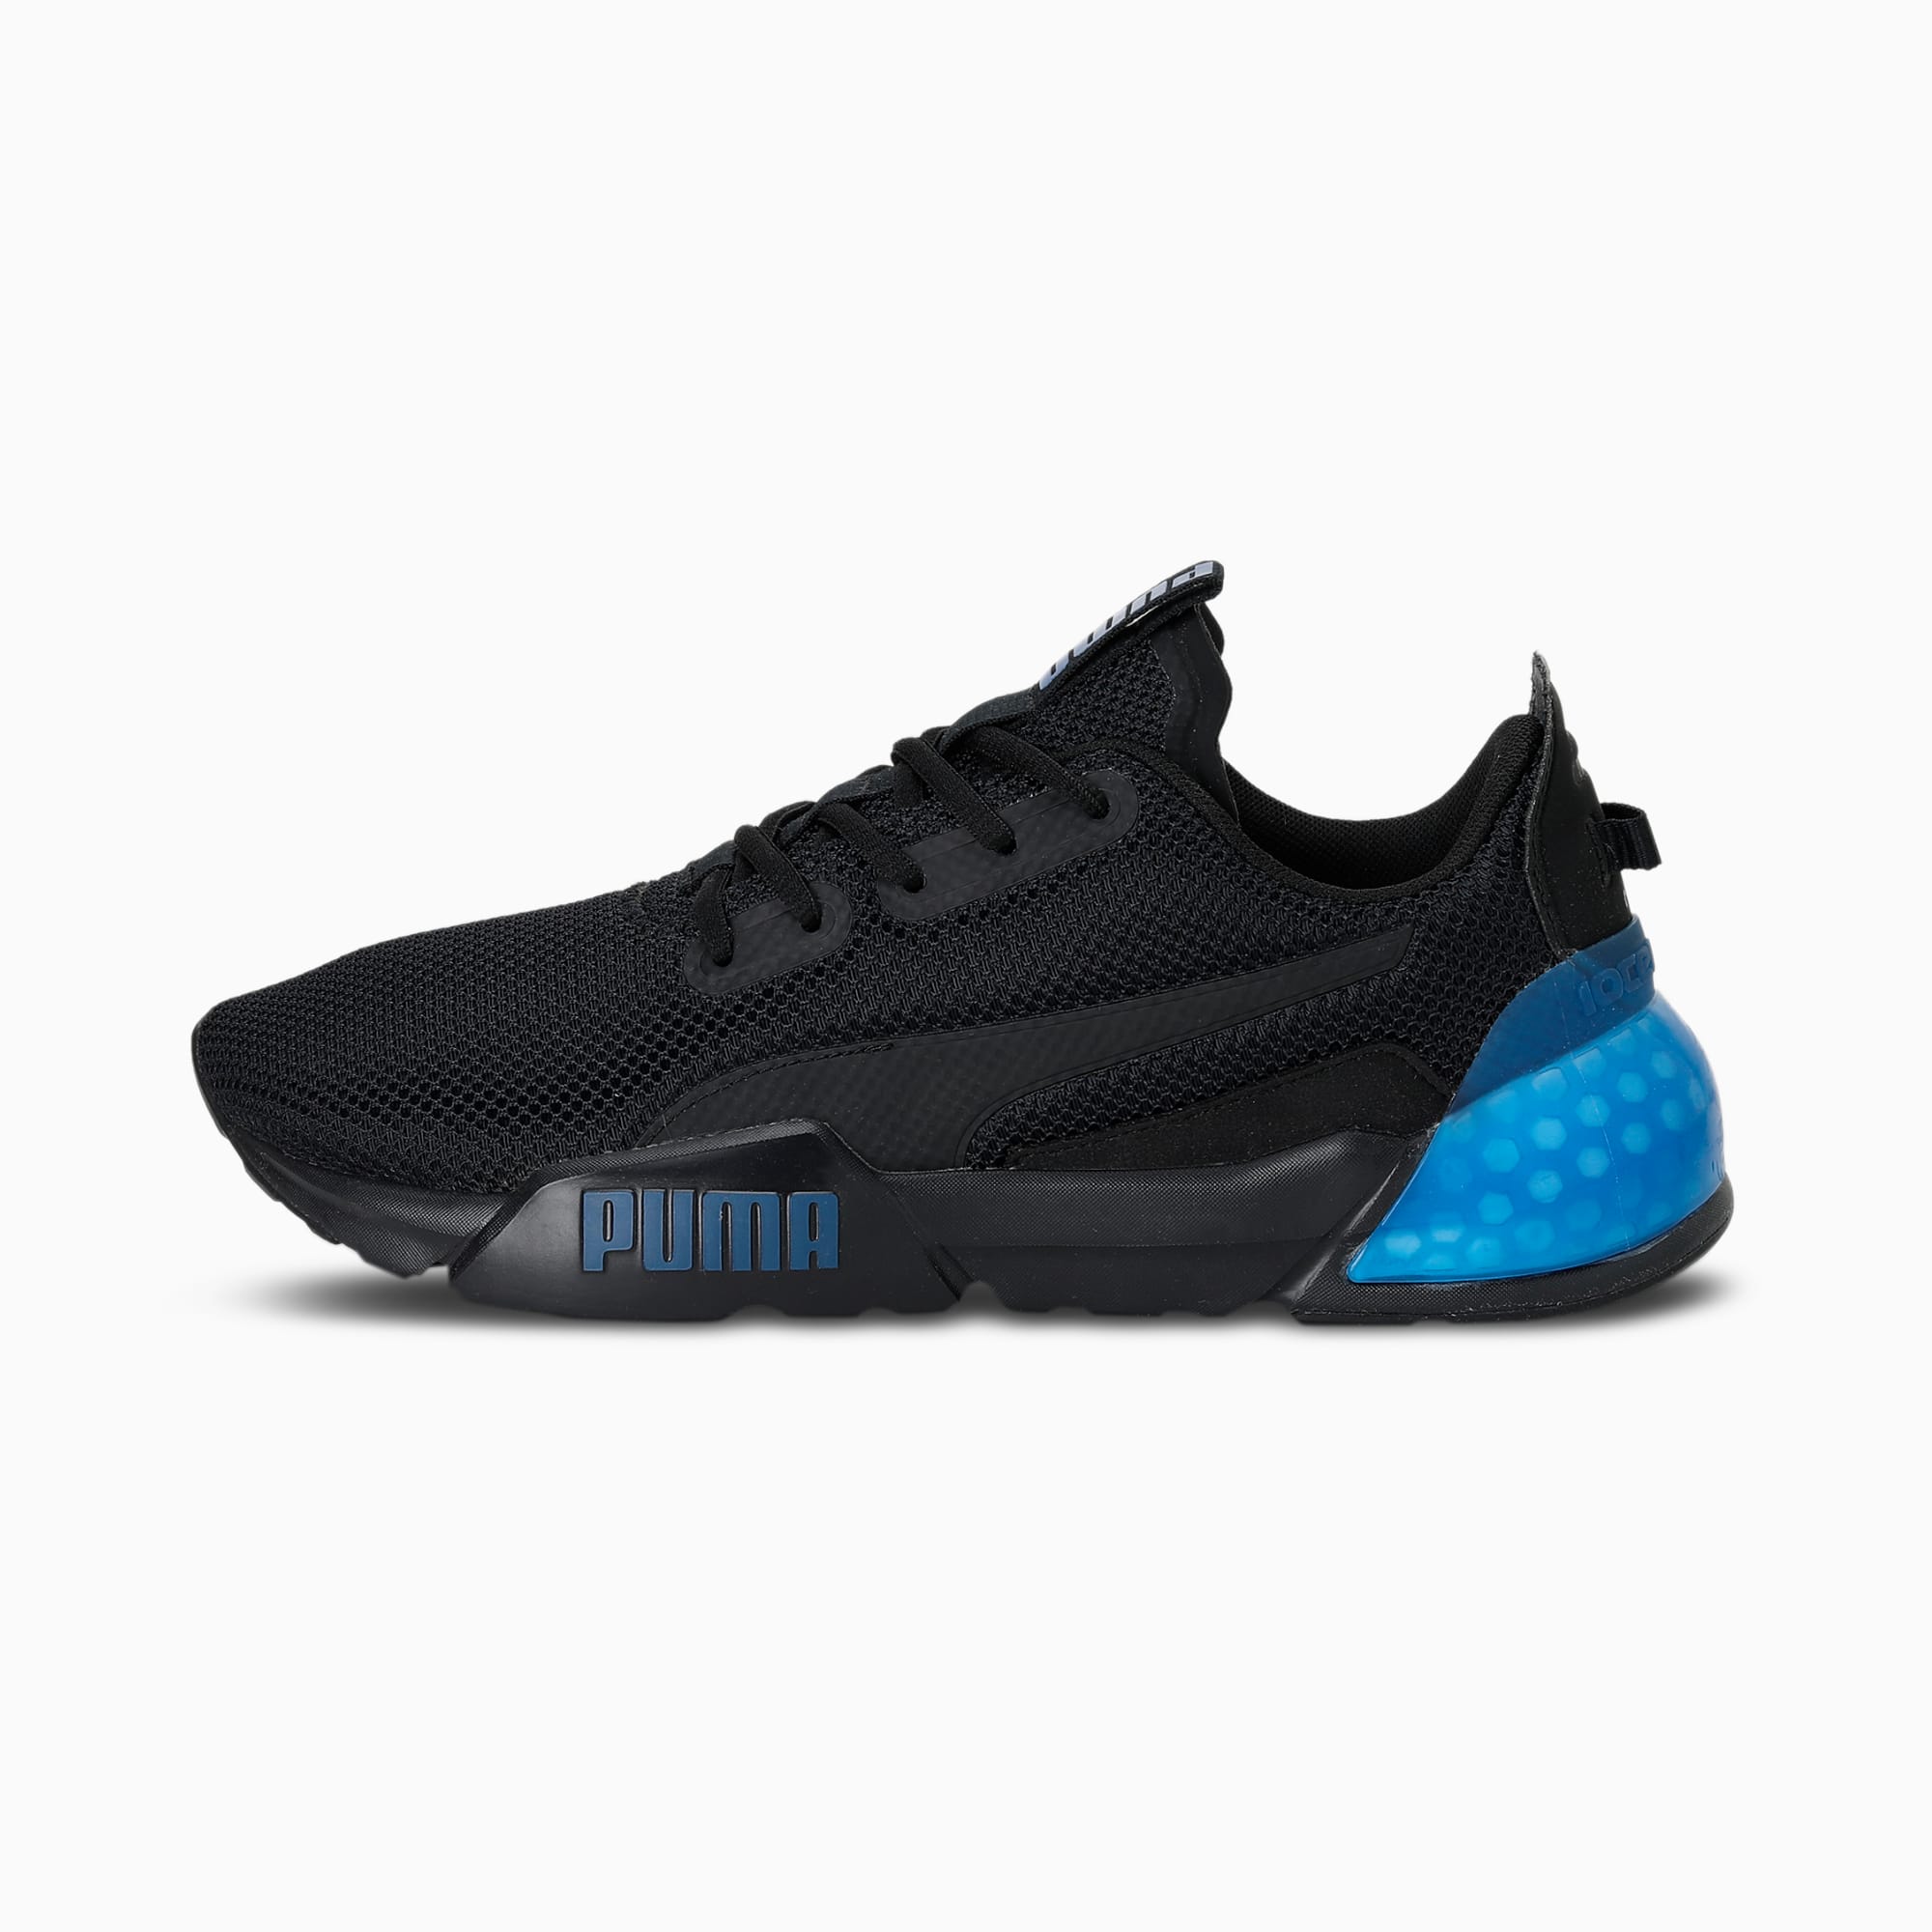 puma black and blue shoes